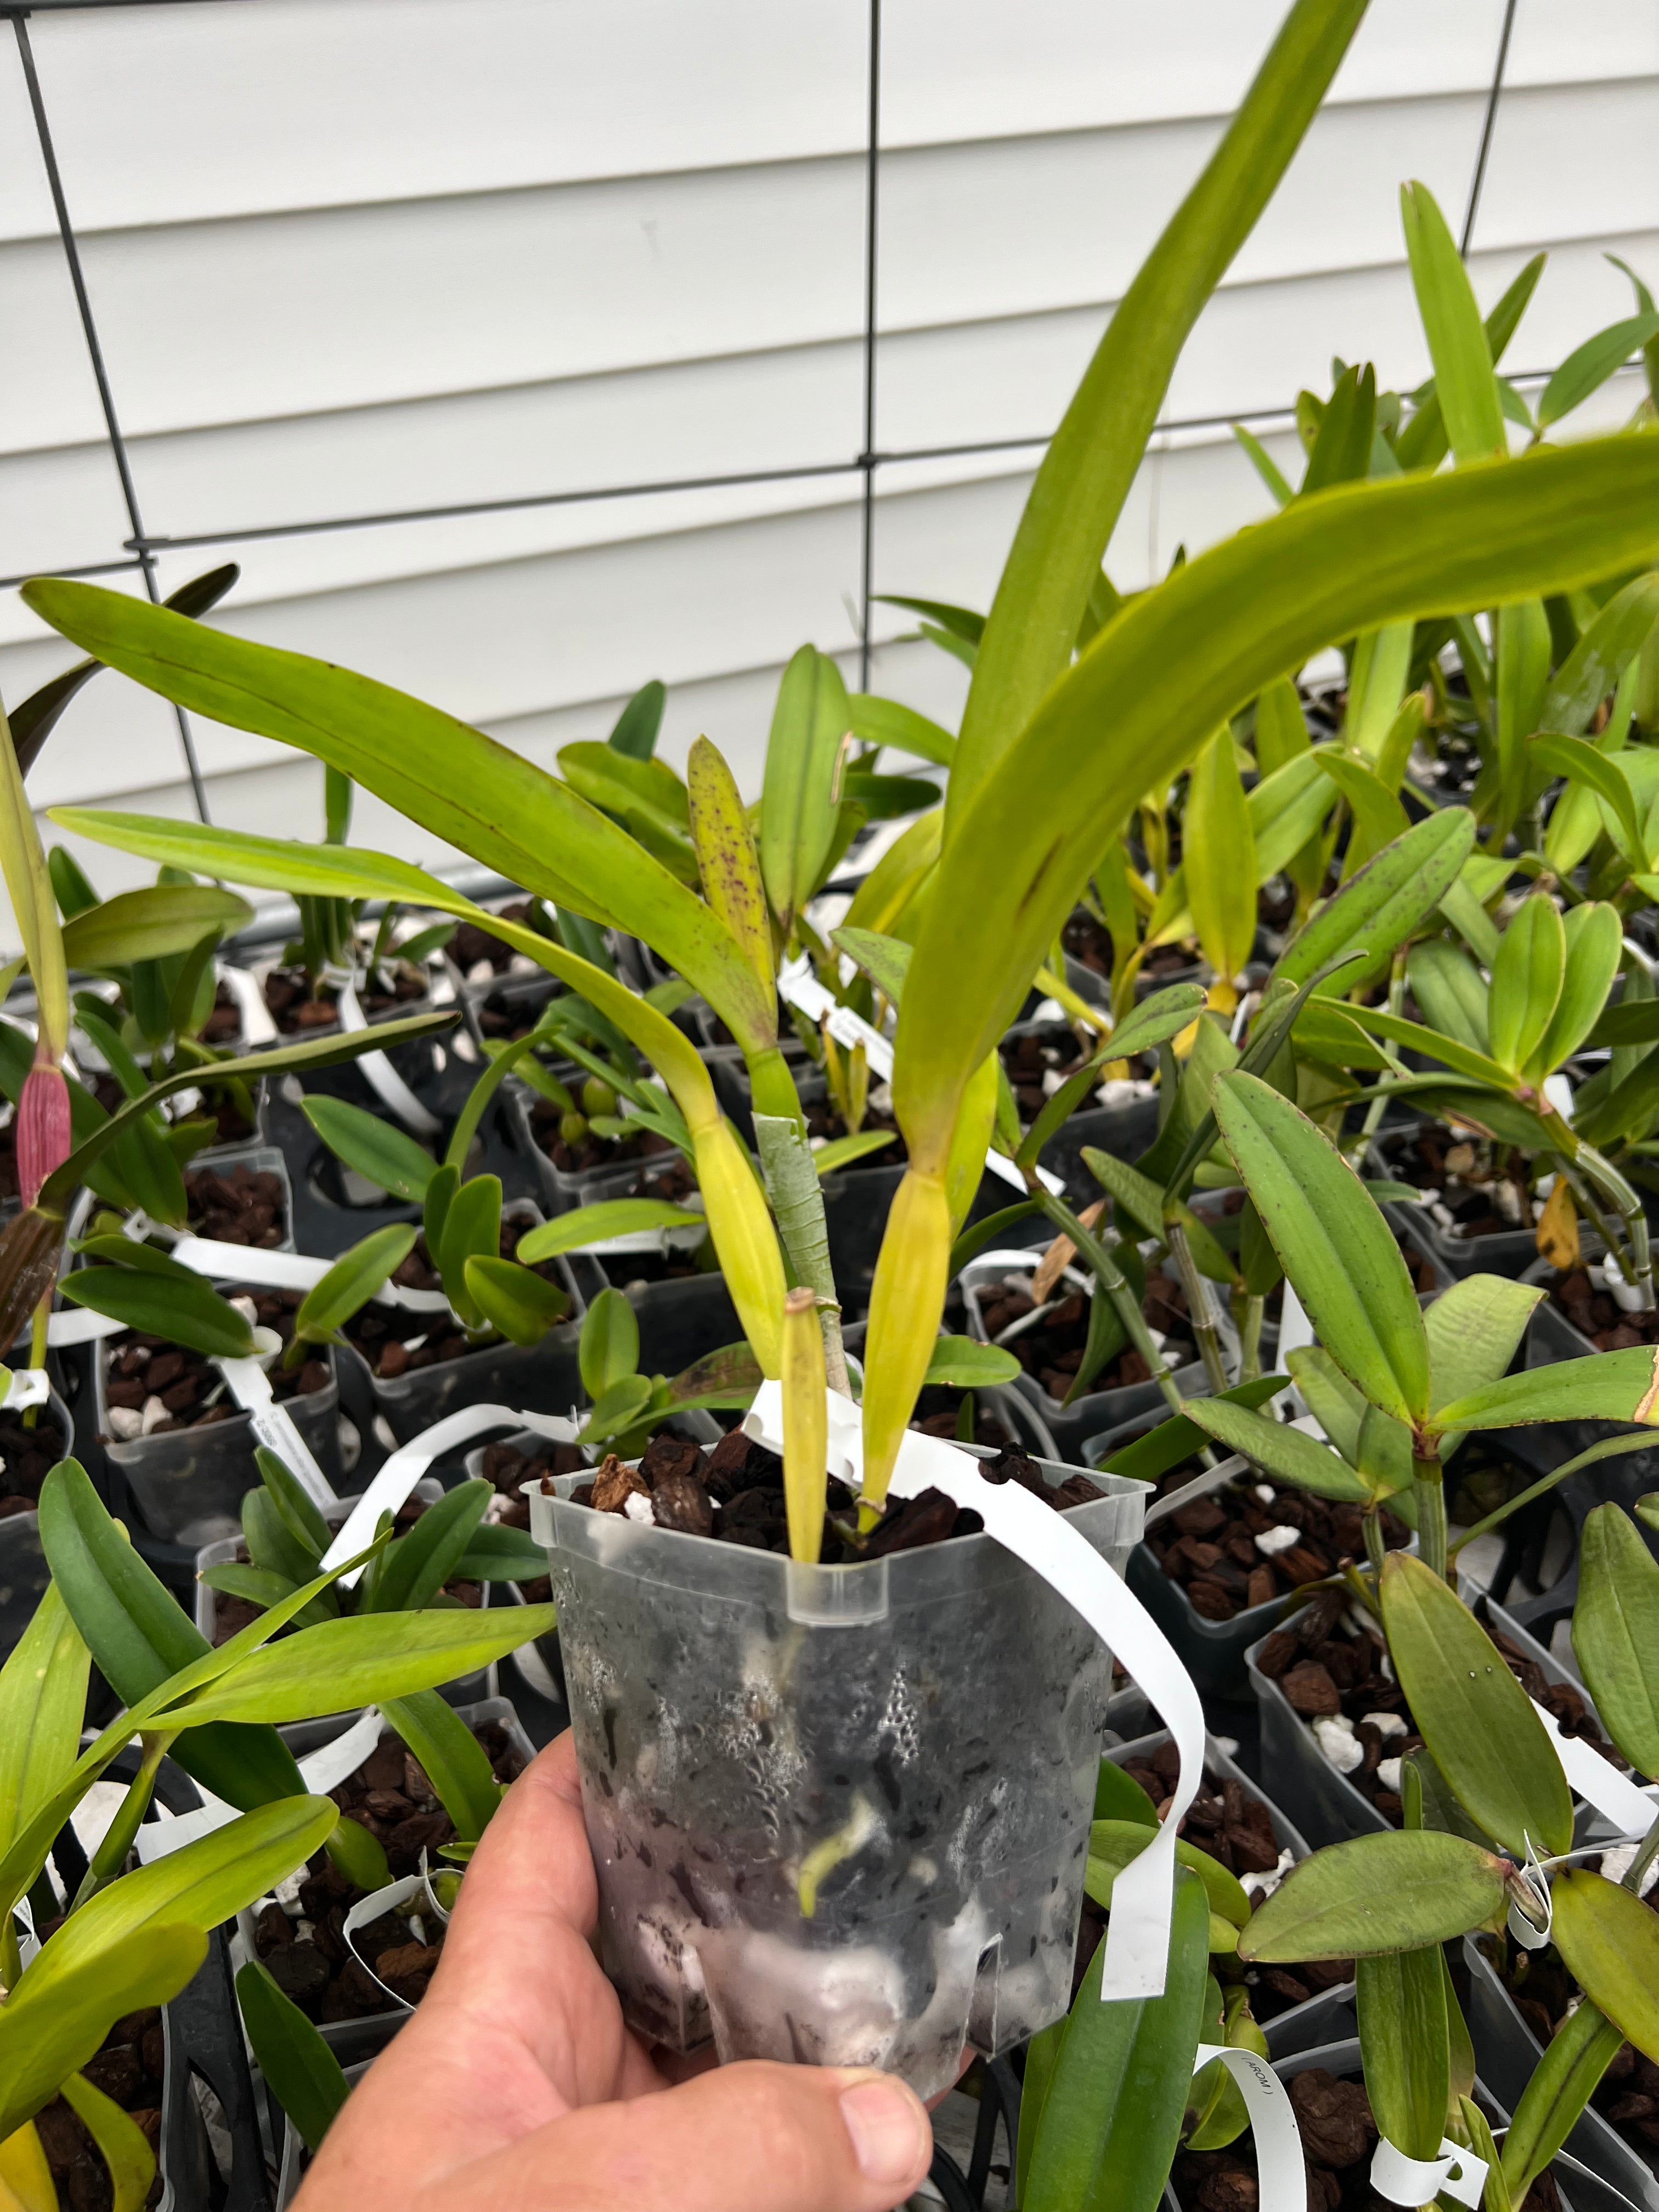 Cattleya. percivaliana alba (grandiflora ‘Sonia’ x ‘Fumaça’)